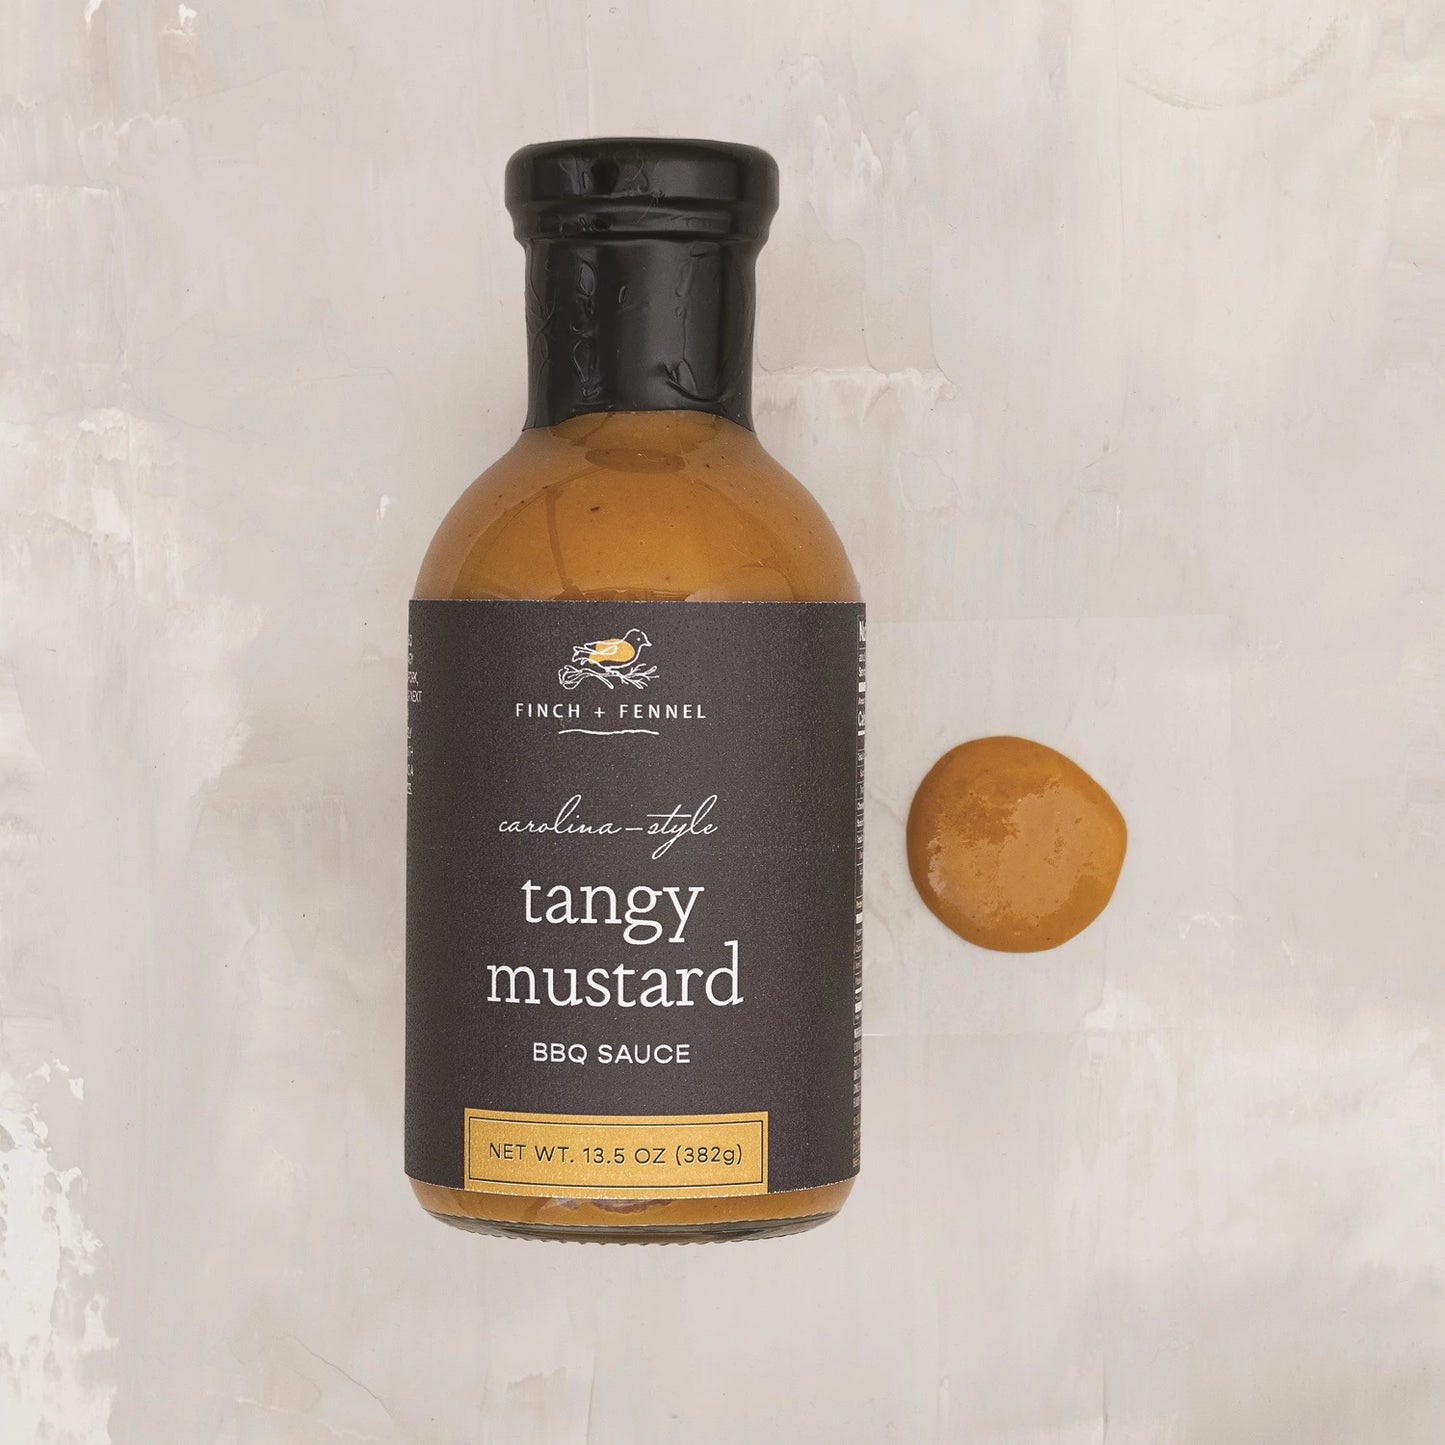 Finch + Fennel Carolina-Style Tangy Mustard BBQ Sauce